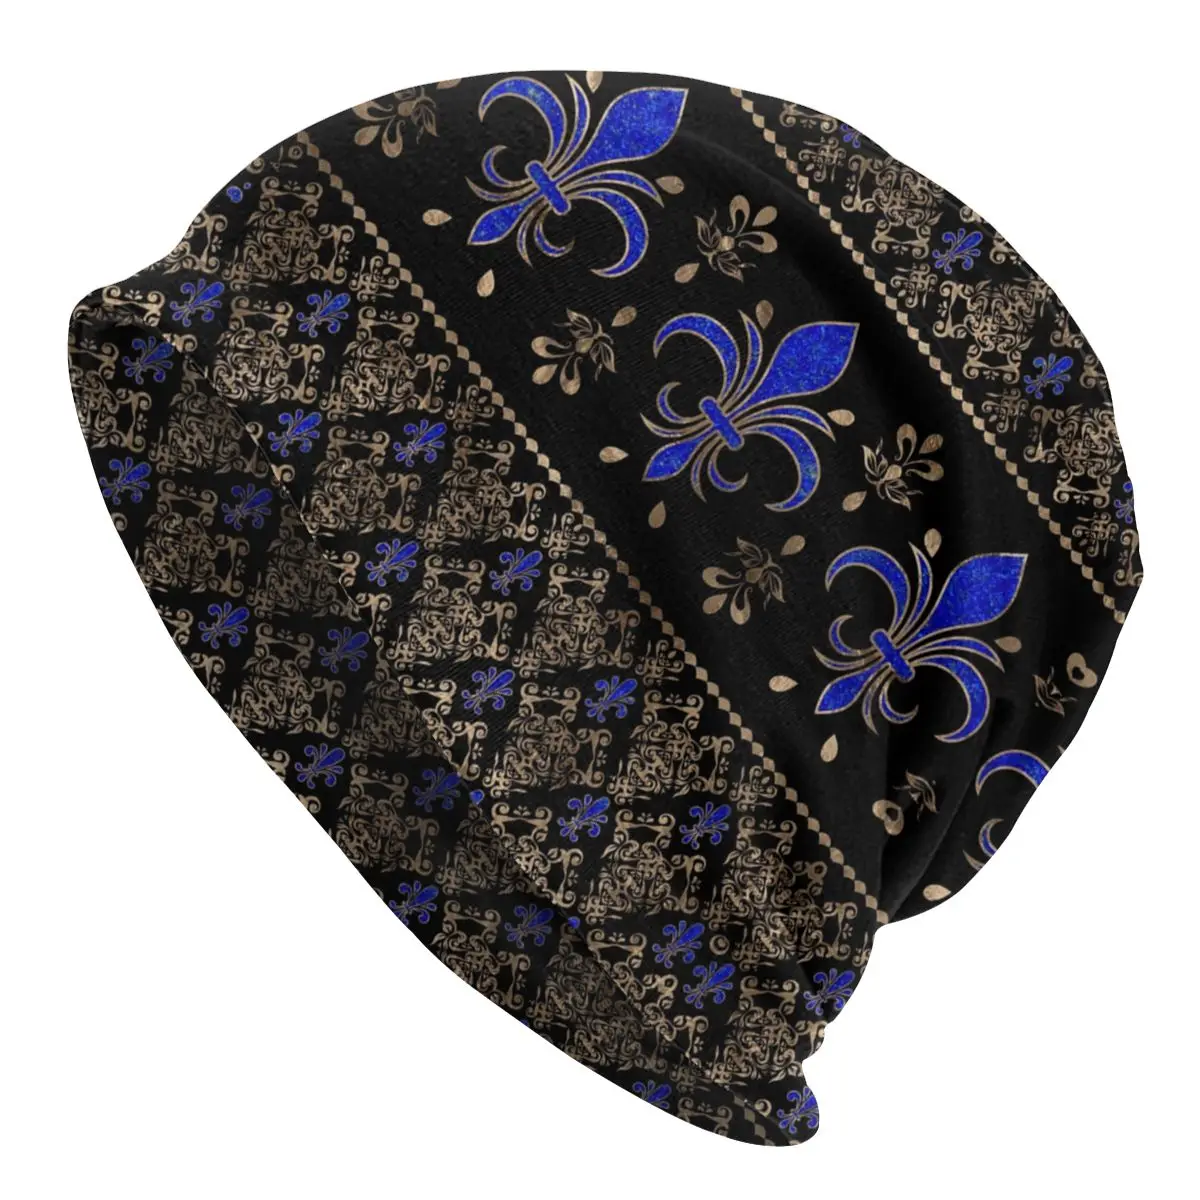 

Fleur De Lis Ornament Lapils Lazuli And Gold Bonnet Beanie Knitted Hats Unisex Royalty Lily Petals Flower Skullies Beanies Caps